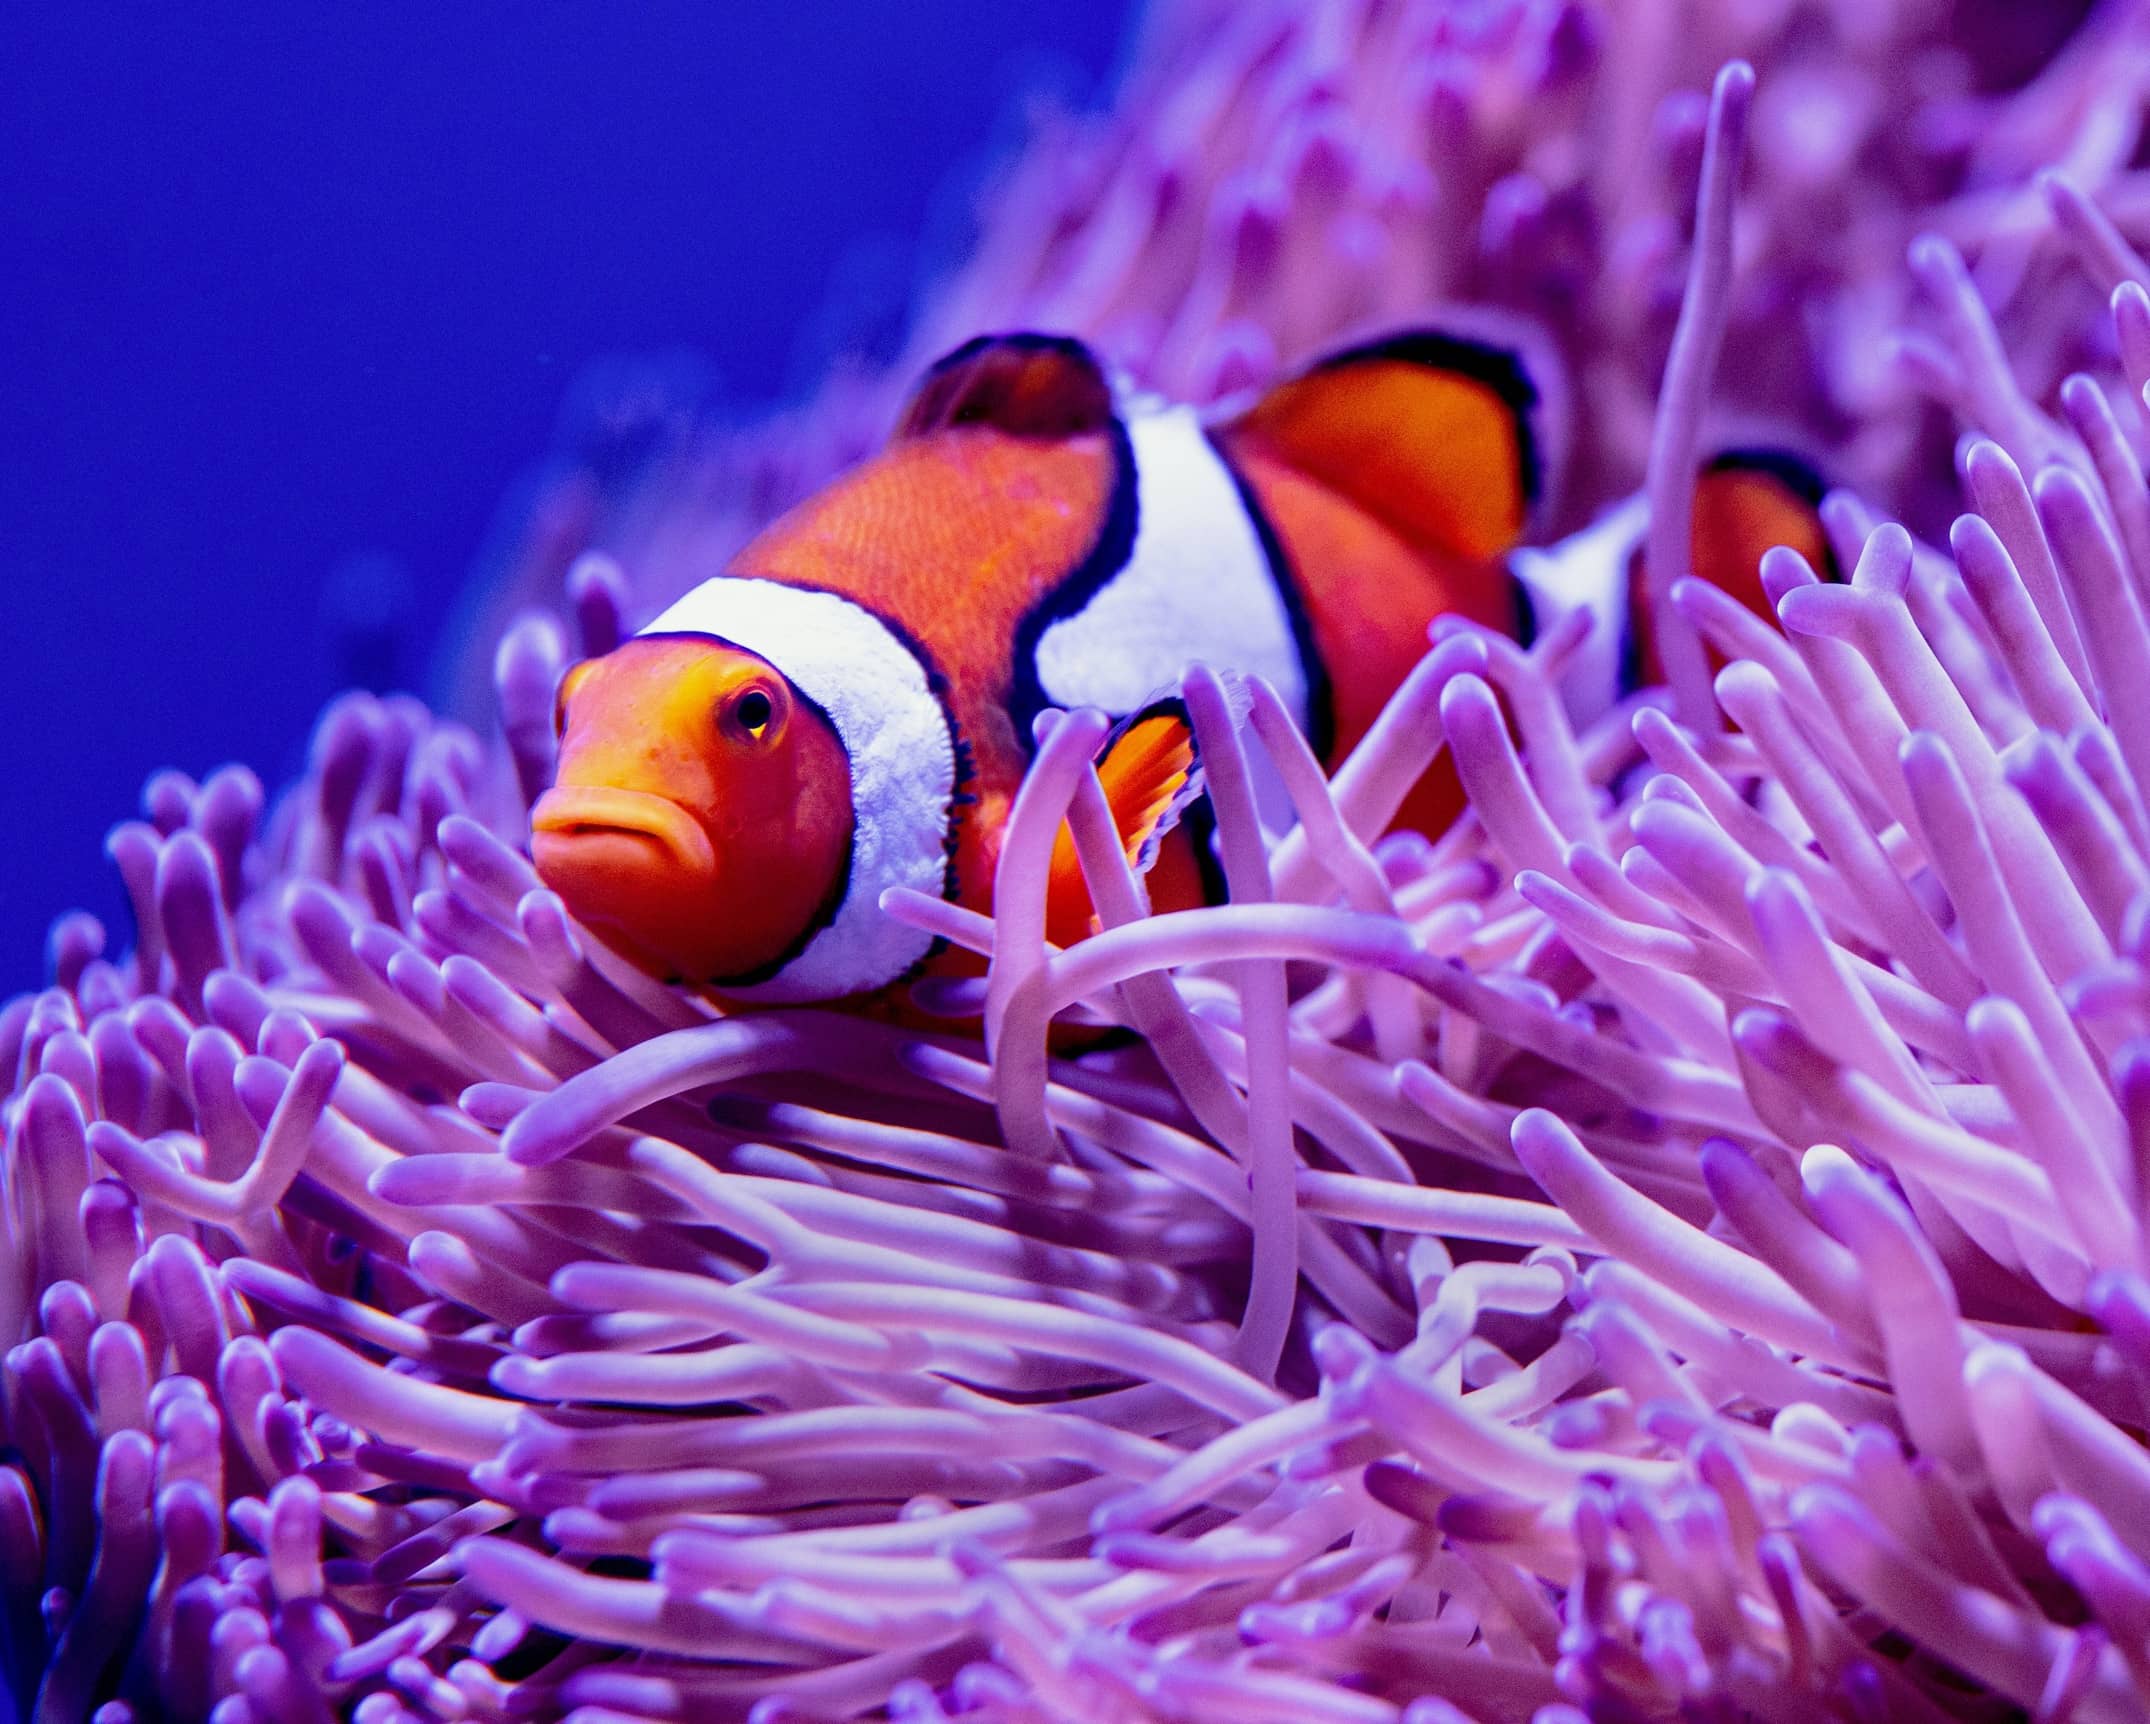 Clownfish by David Clode via Unsplash